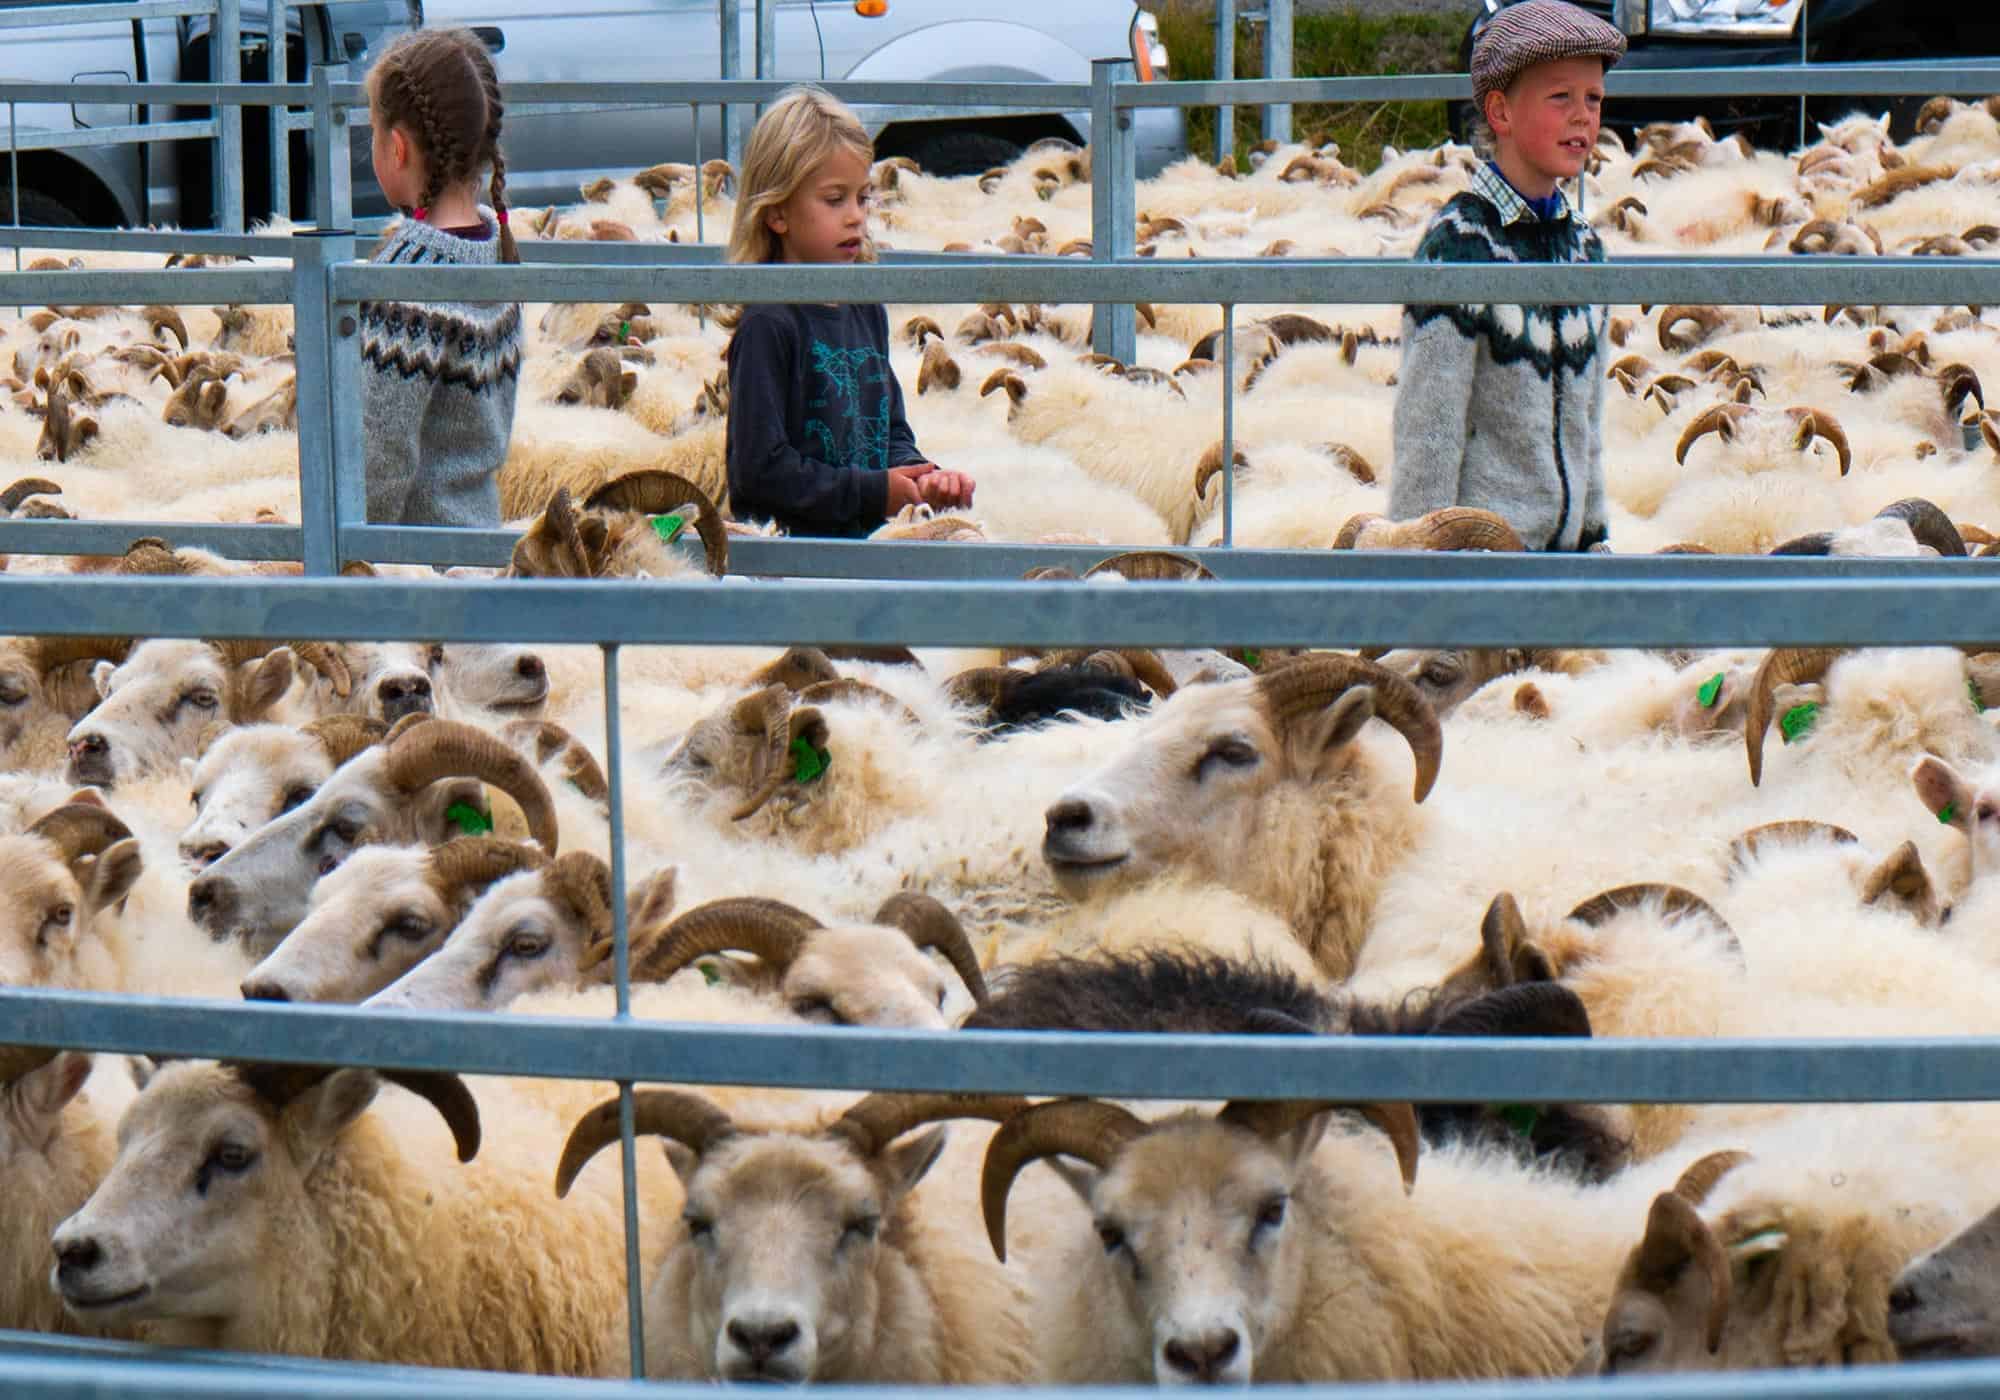 Three kids walk through a pen filled with Icelandic sheep.